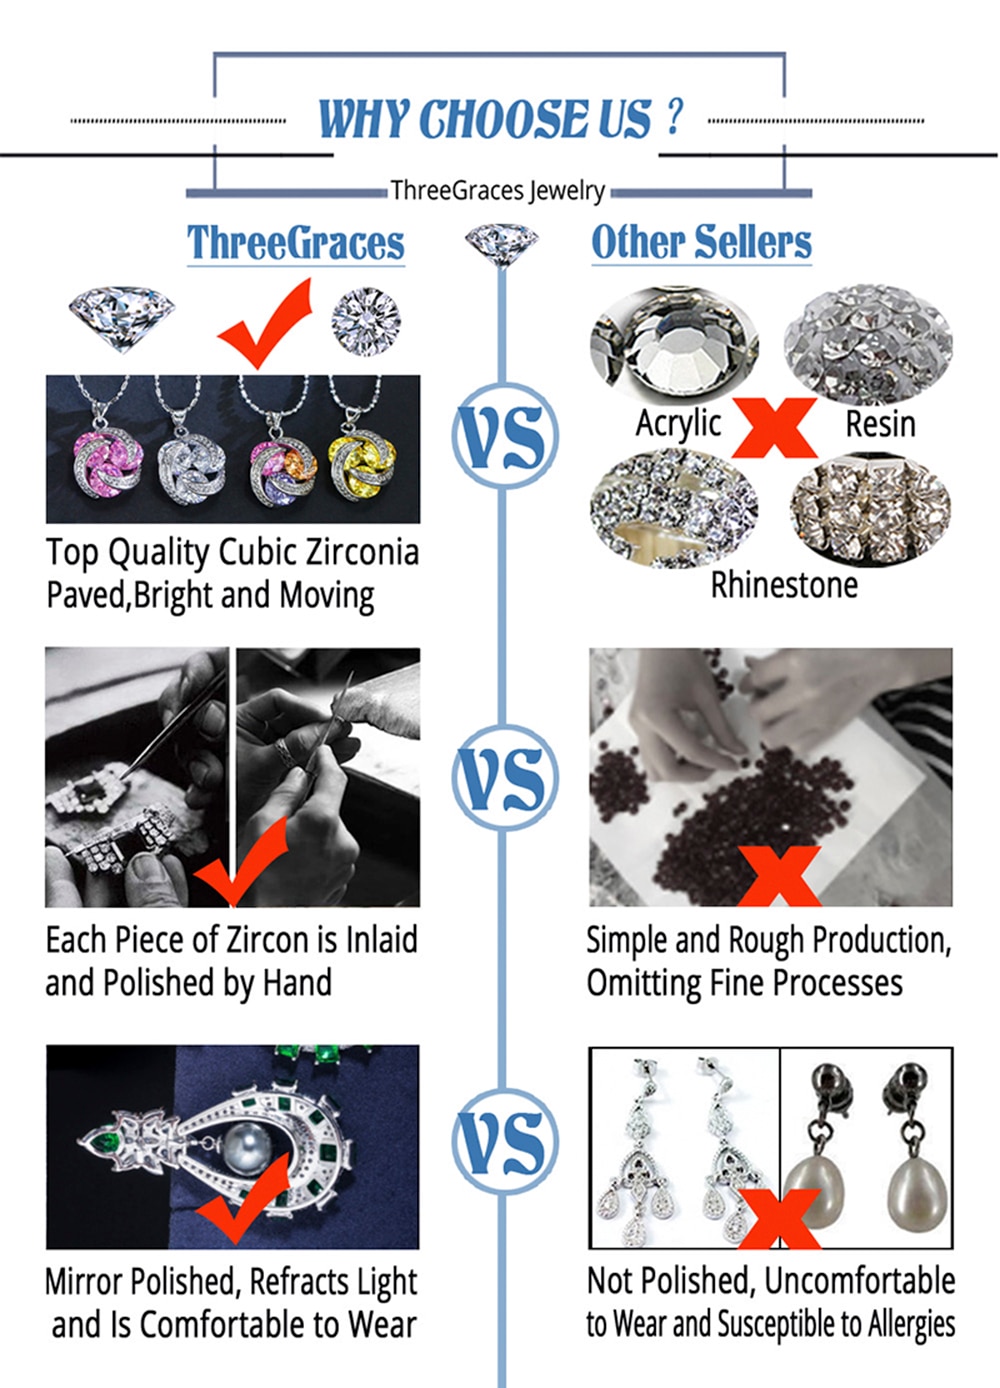 ThreeGraces-3Pcs-Shiny-Cubic-Zirconia-Big-Water-Drop-CZ-Necklace-Earrings-Bracelet-Bridal-Wedding-Je-1005003270313022-10